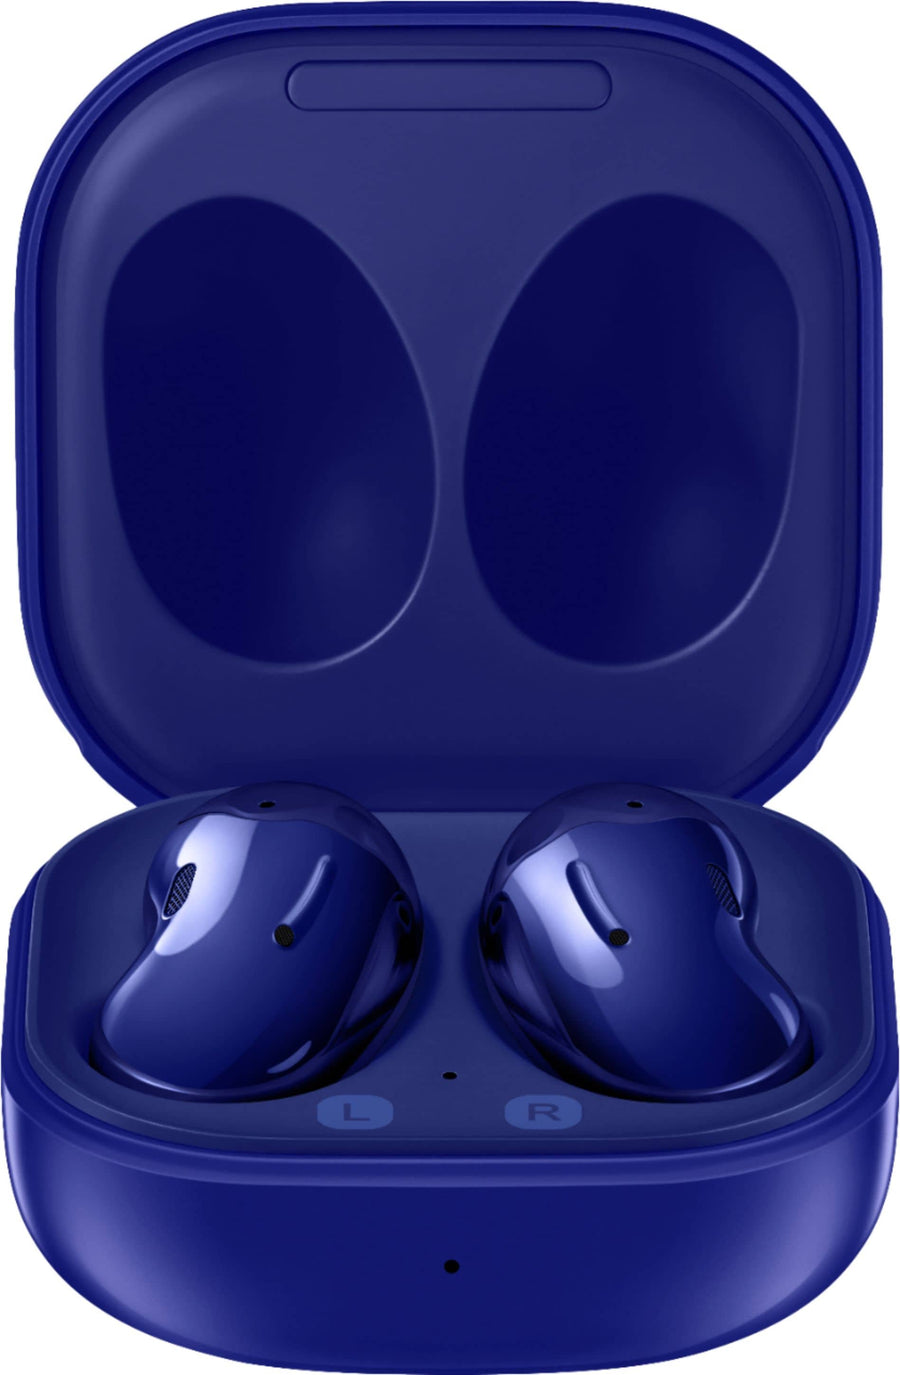 Samsung - Galaxy Buds Live True Wireless Earbud Headphones - Blue_0